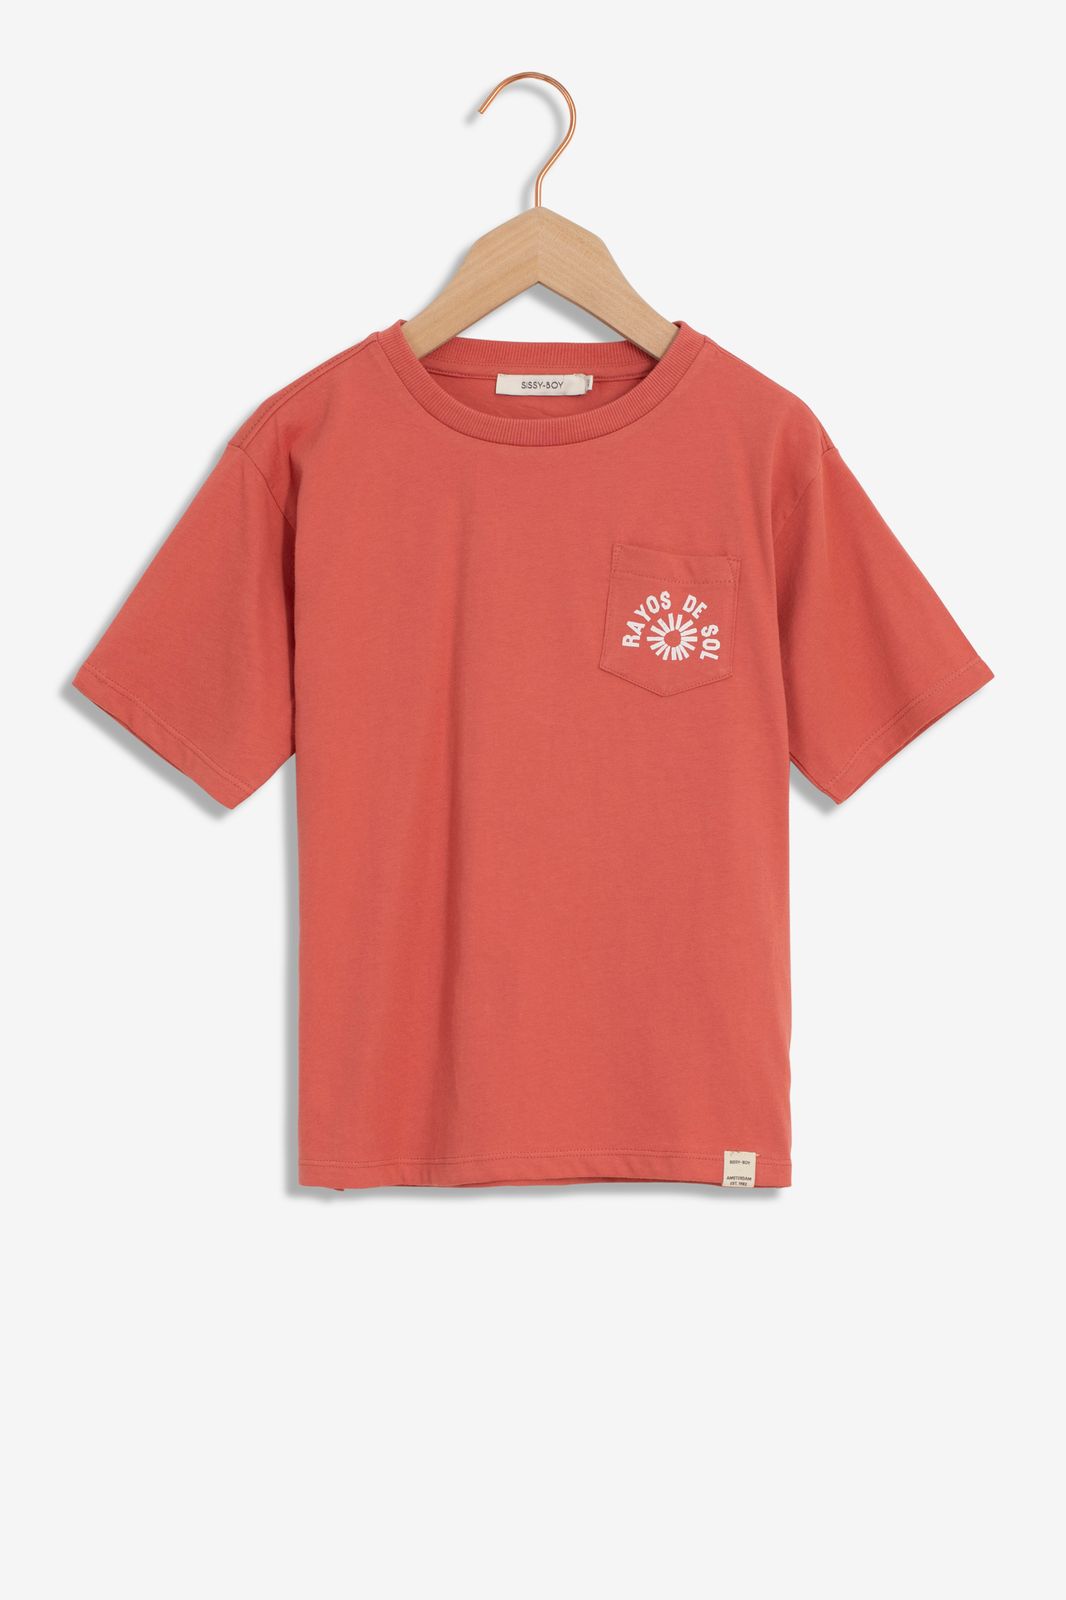 Roze Garment dye T-shirt met print op rug - Kids | Sissy-Boy